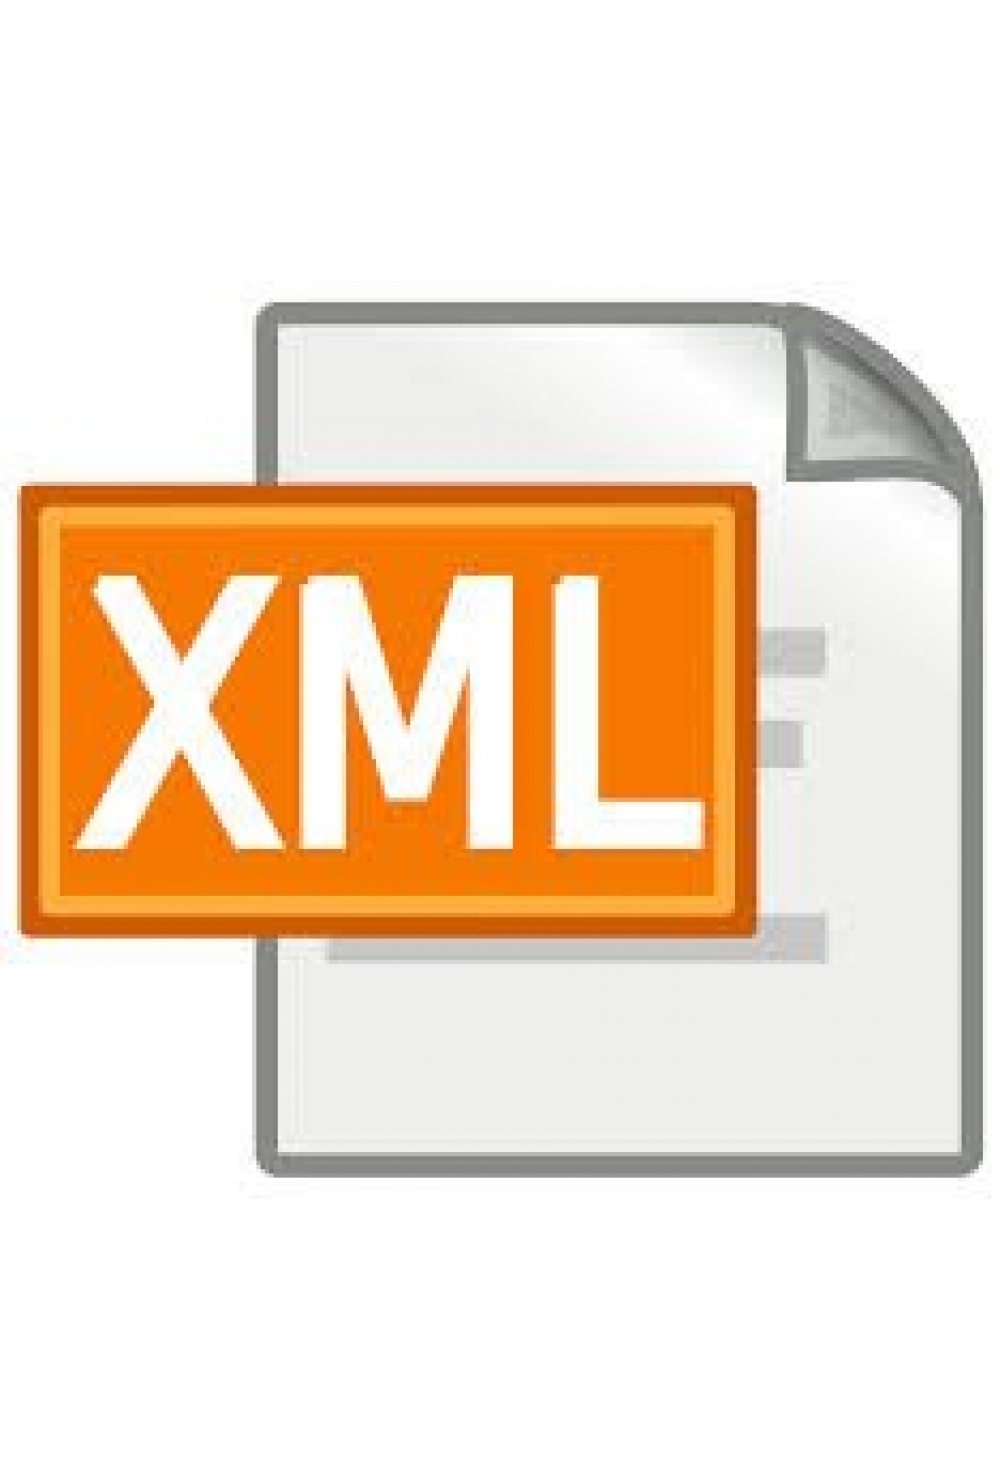 xml data hizmetleri 1 YILLIK paket